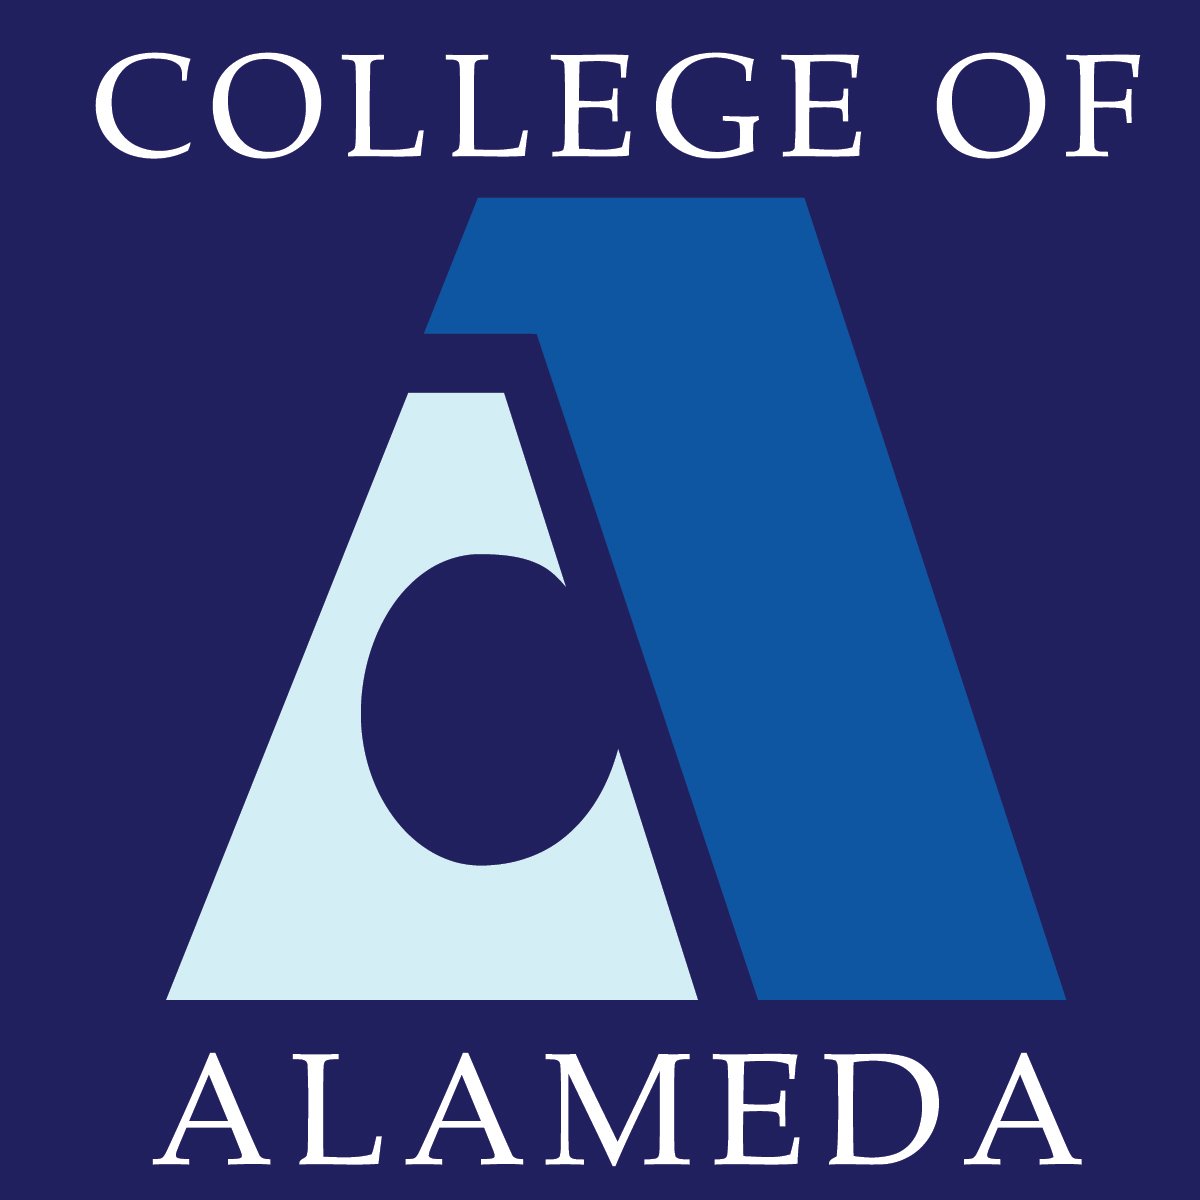 College of alameda